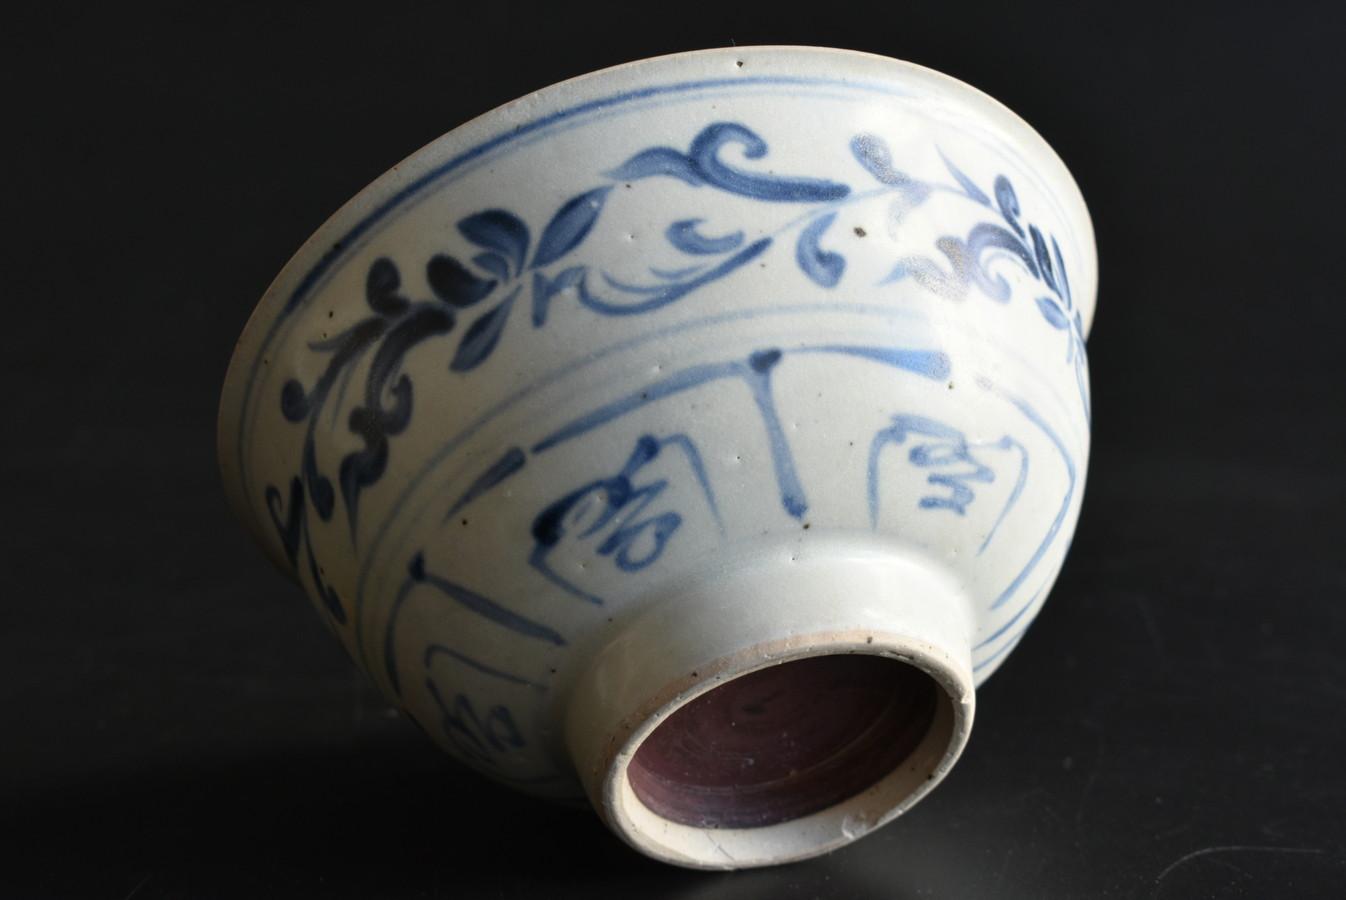 Vietnamese Antique Bowl 16th Century / 